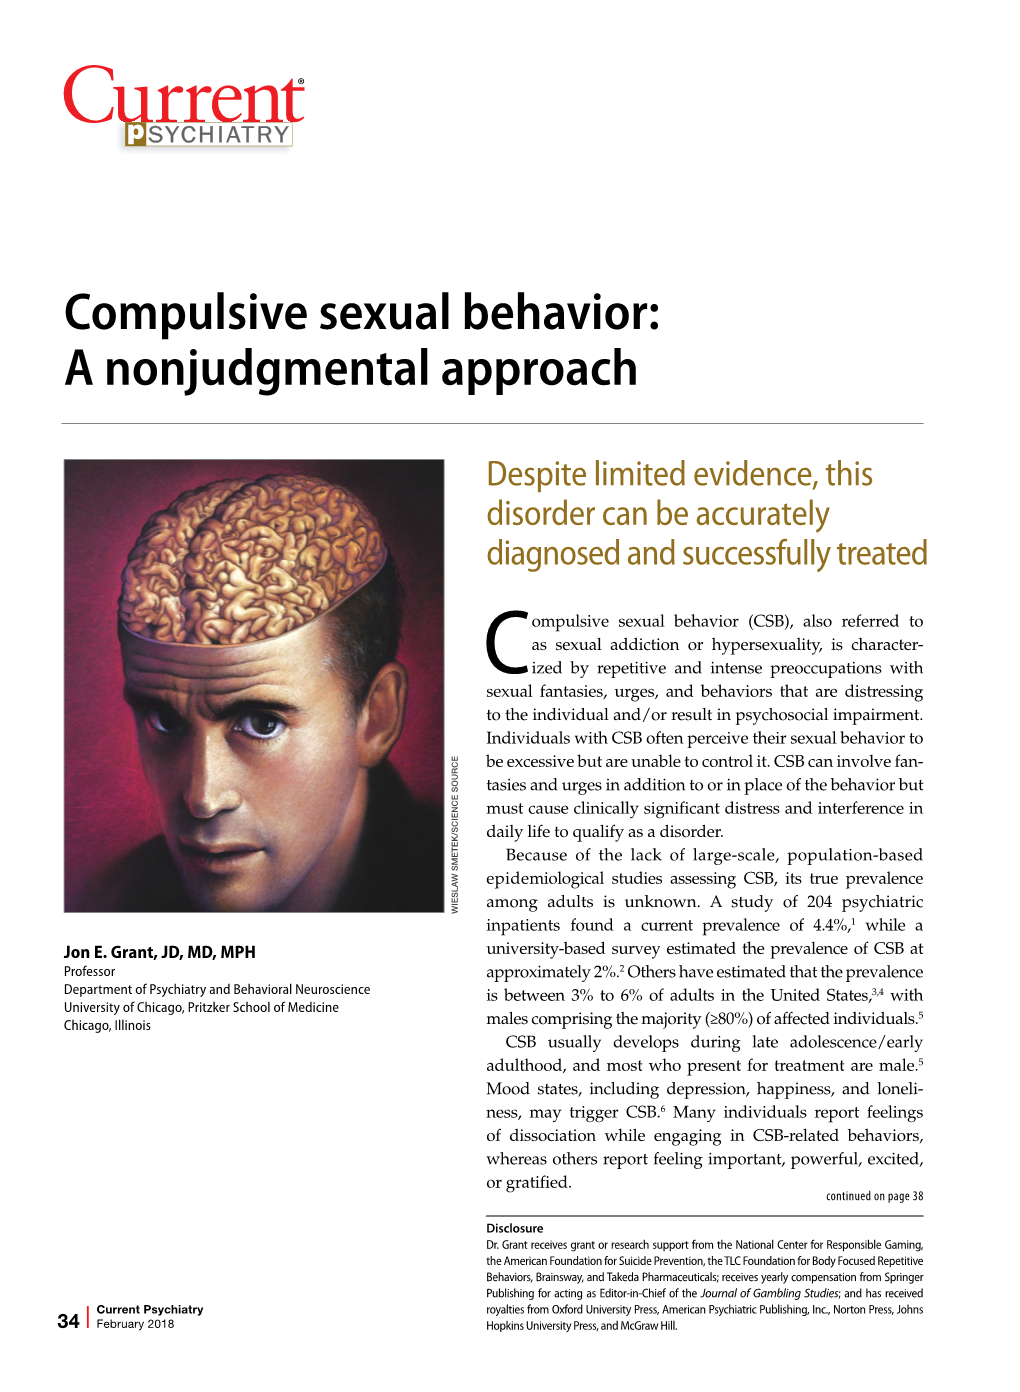 Compulsive Sexual Behavior: a Nonjudgmental Approach